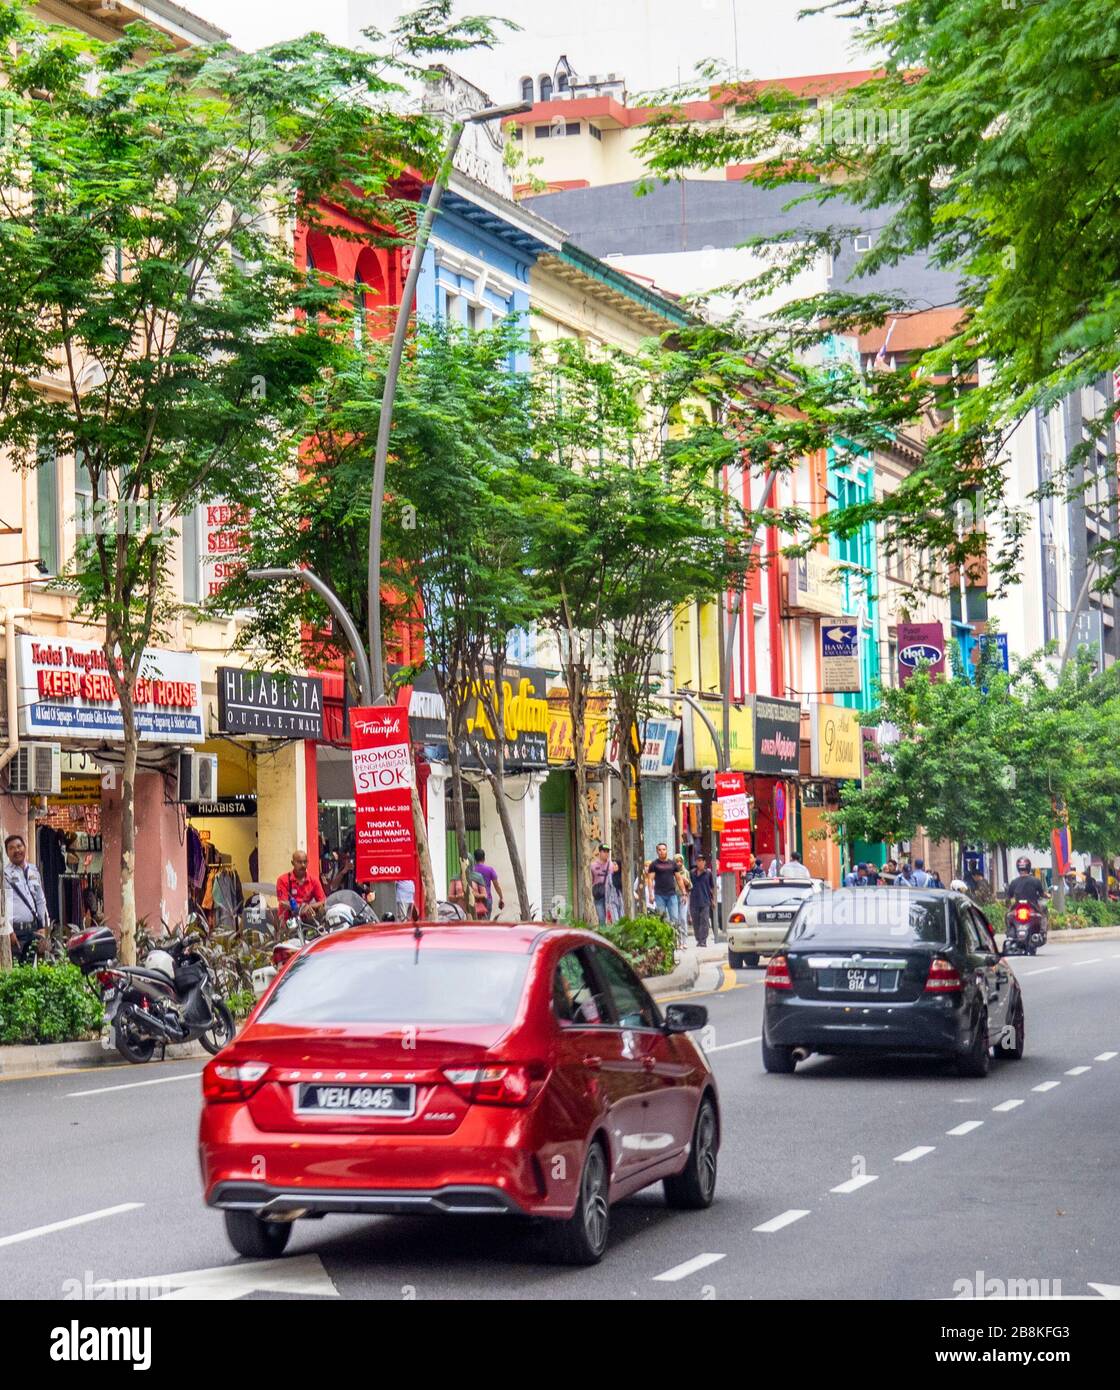 Traffic in tree lined street Jalan Tuanku Abdul Rahman and terrace shophouses with fabric and textile shops Kuala Lumpur Malaysia Stock Photo